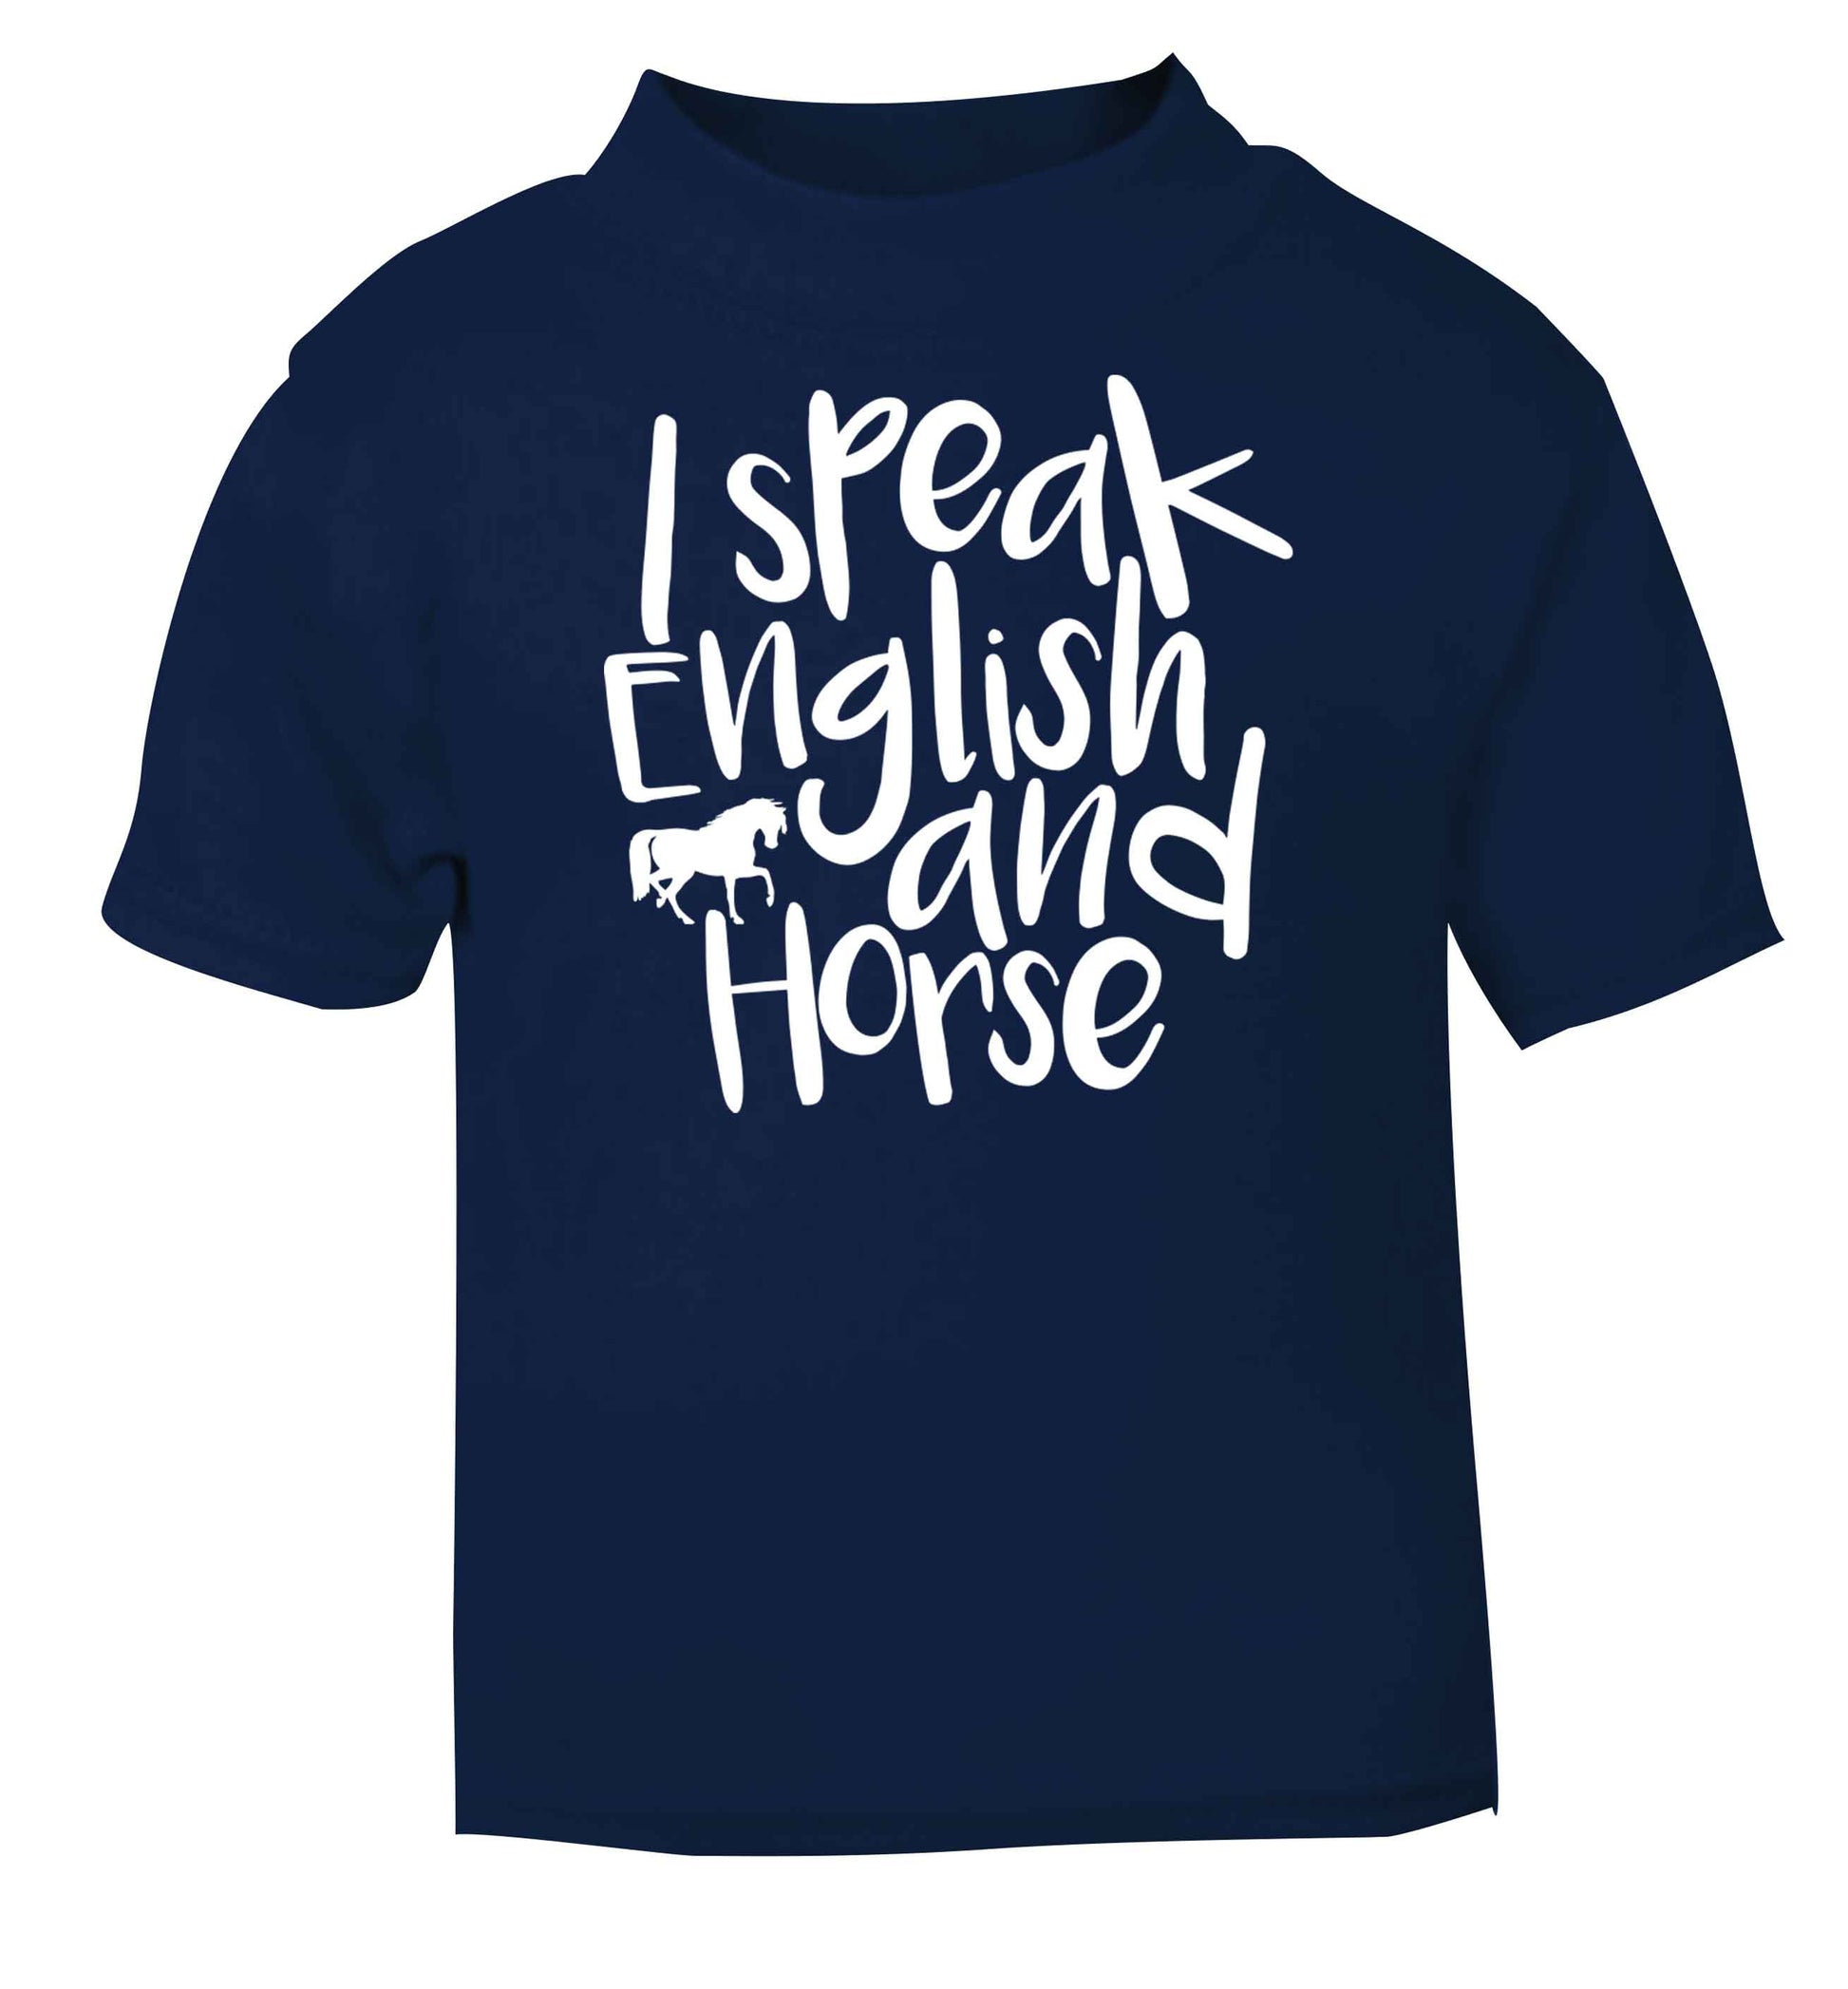 I speak English and horse navy baby toddler Tshirt 2 Years